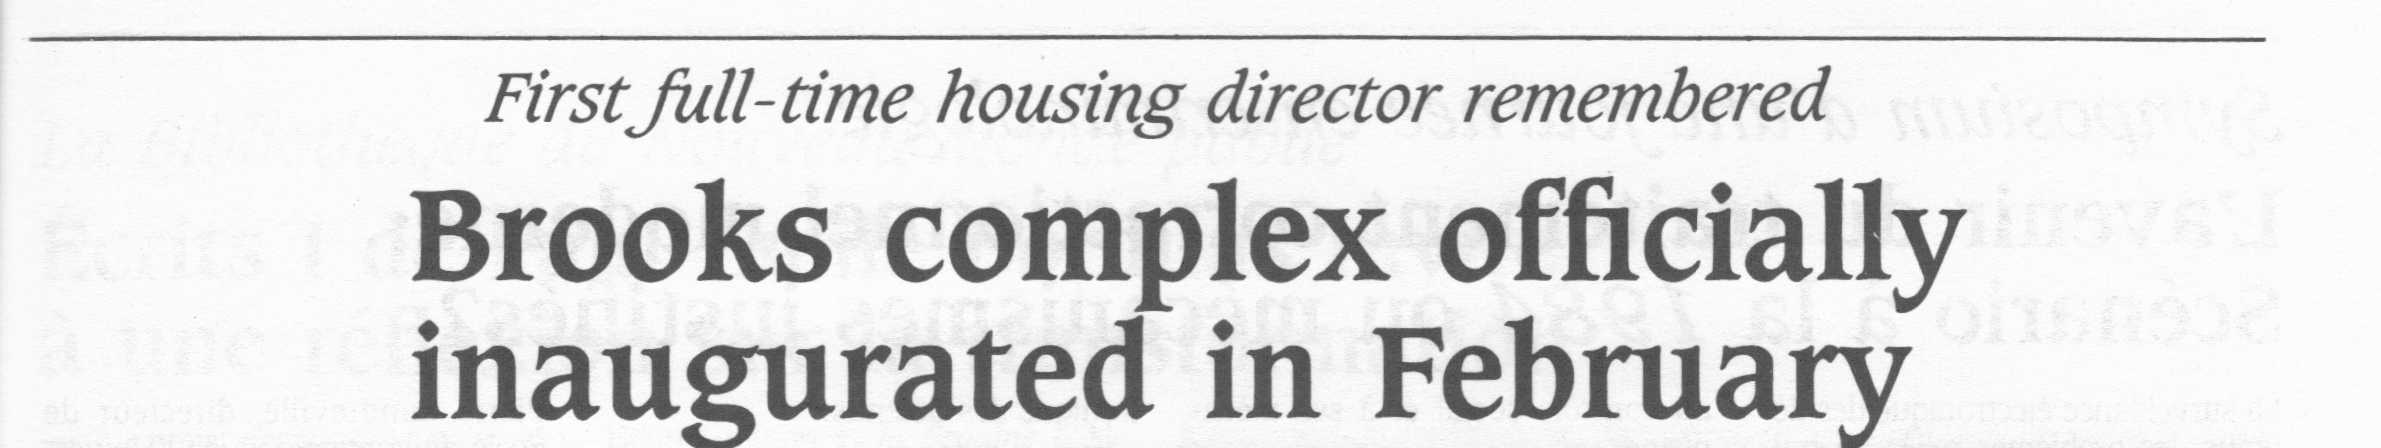 University of Ottawa Newspaper Headline announing opening of Brooks Residence